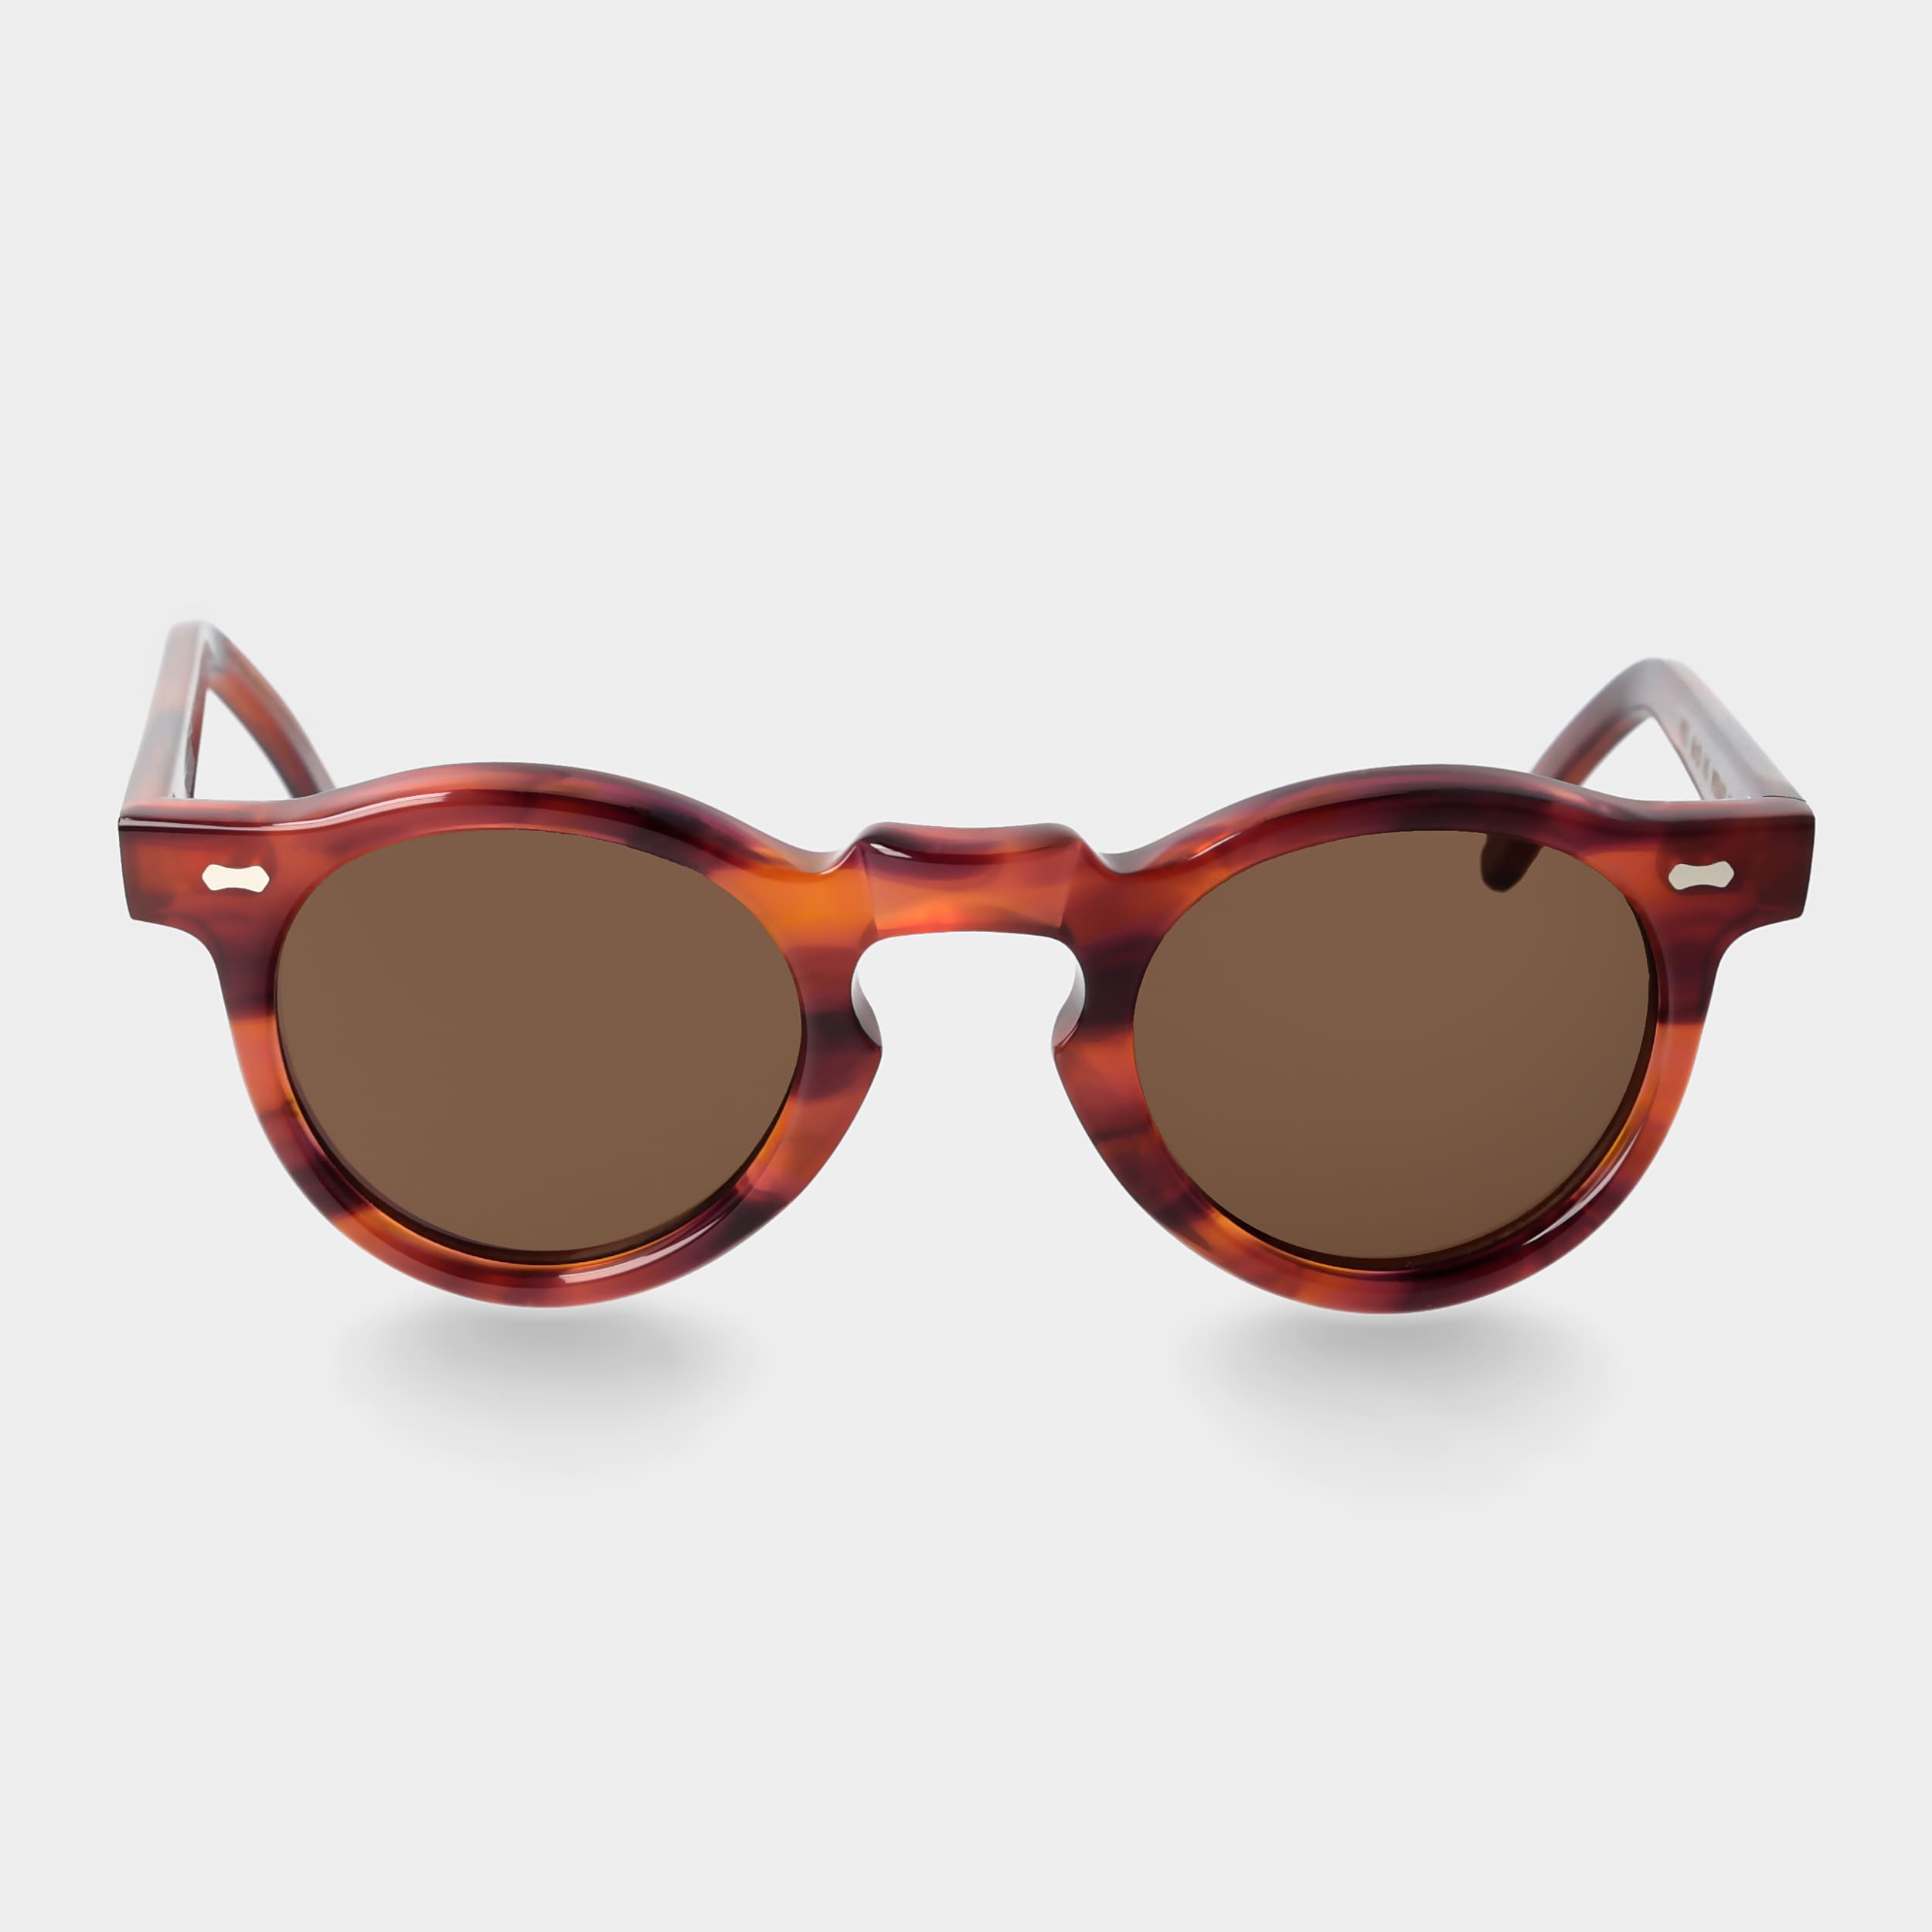 Sunglasses with Brown | Eyewear Italy handmade Lenses, TBD in